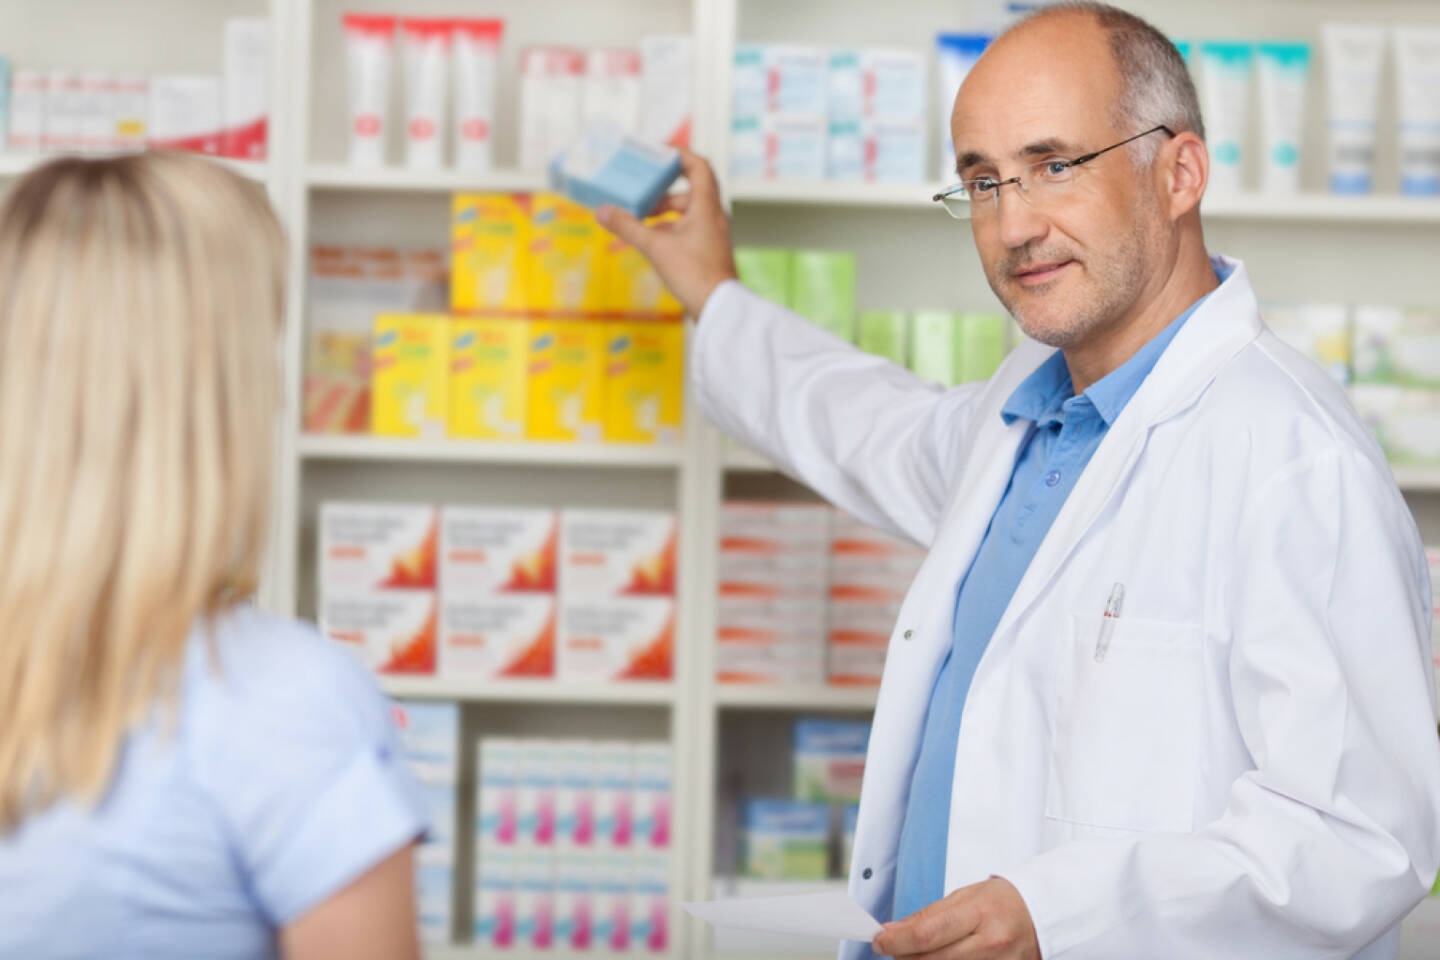 Medizin, Apotheke, Medikament, Pharma, Krankheit, http://www.shutterstock.com/de/pic-140487739/stock-photo-pharmacist-talking-to-female-client-while-taking-medicine-of-the-shelf.html